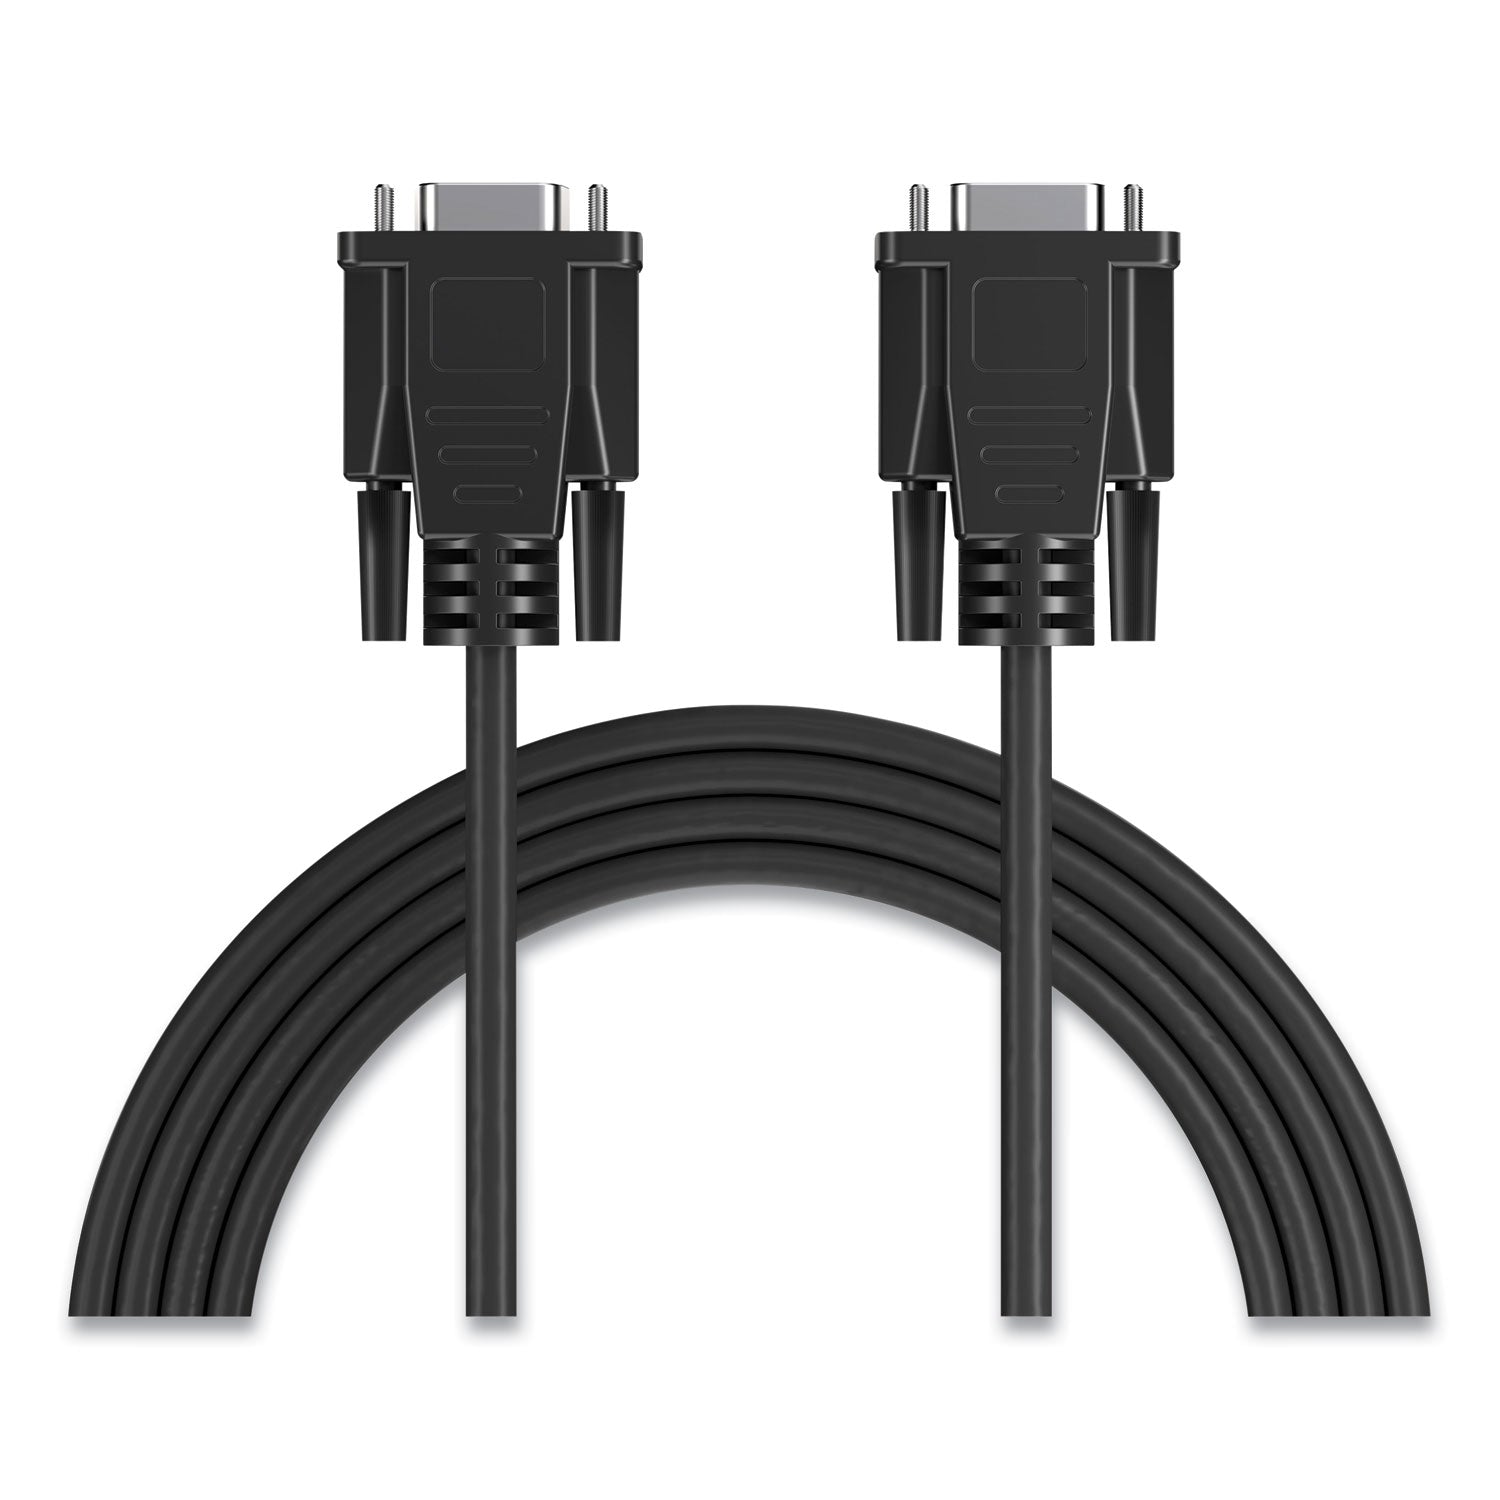 vga-svga-cable-6-ft-black_nxt24400021 - 1